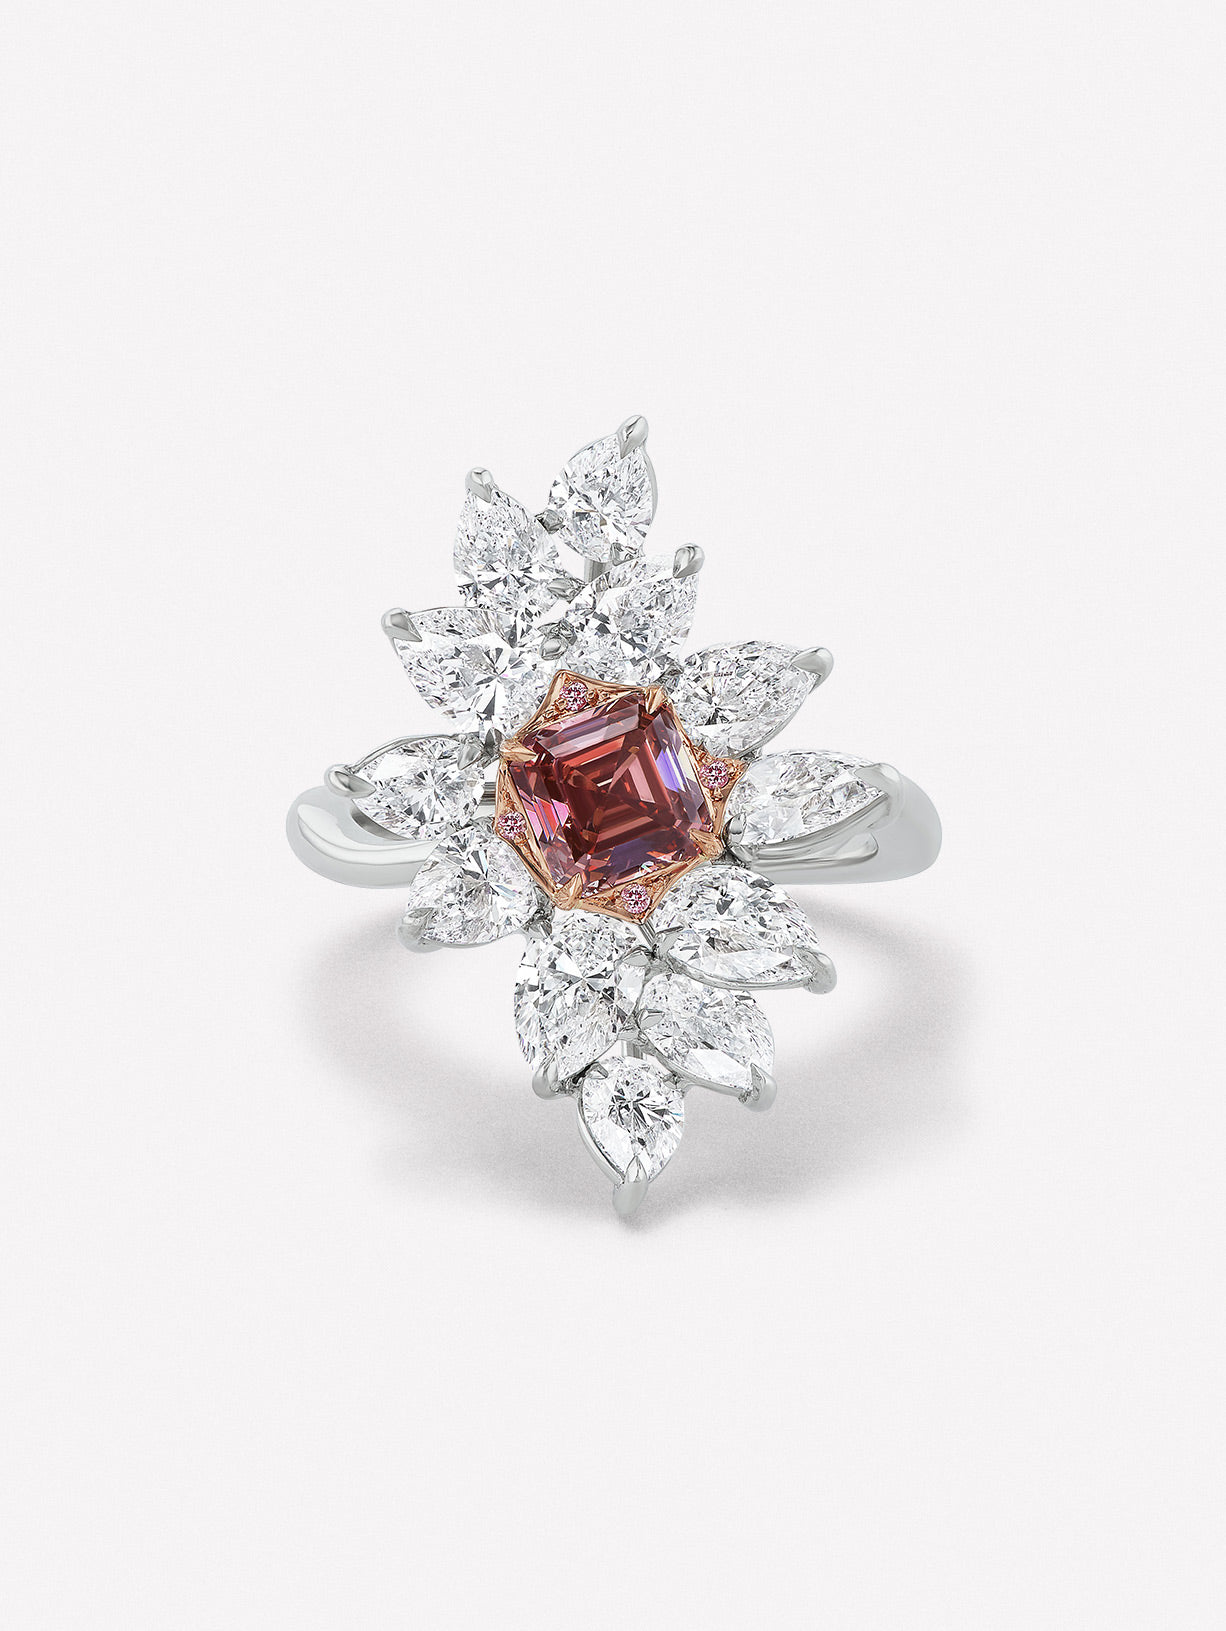 Elongated Cluster Ring - Pink Diamonds, J FINE - J Fine, Rings - Pink Diamond Jewelry, elongated-cluster-ring-by-j-fine - Argyle Pink Diamonds